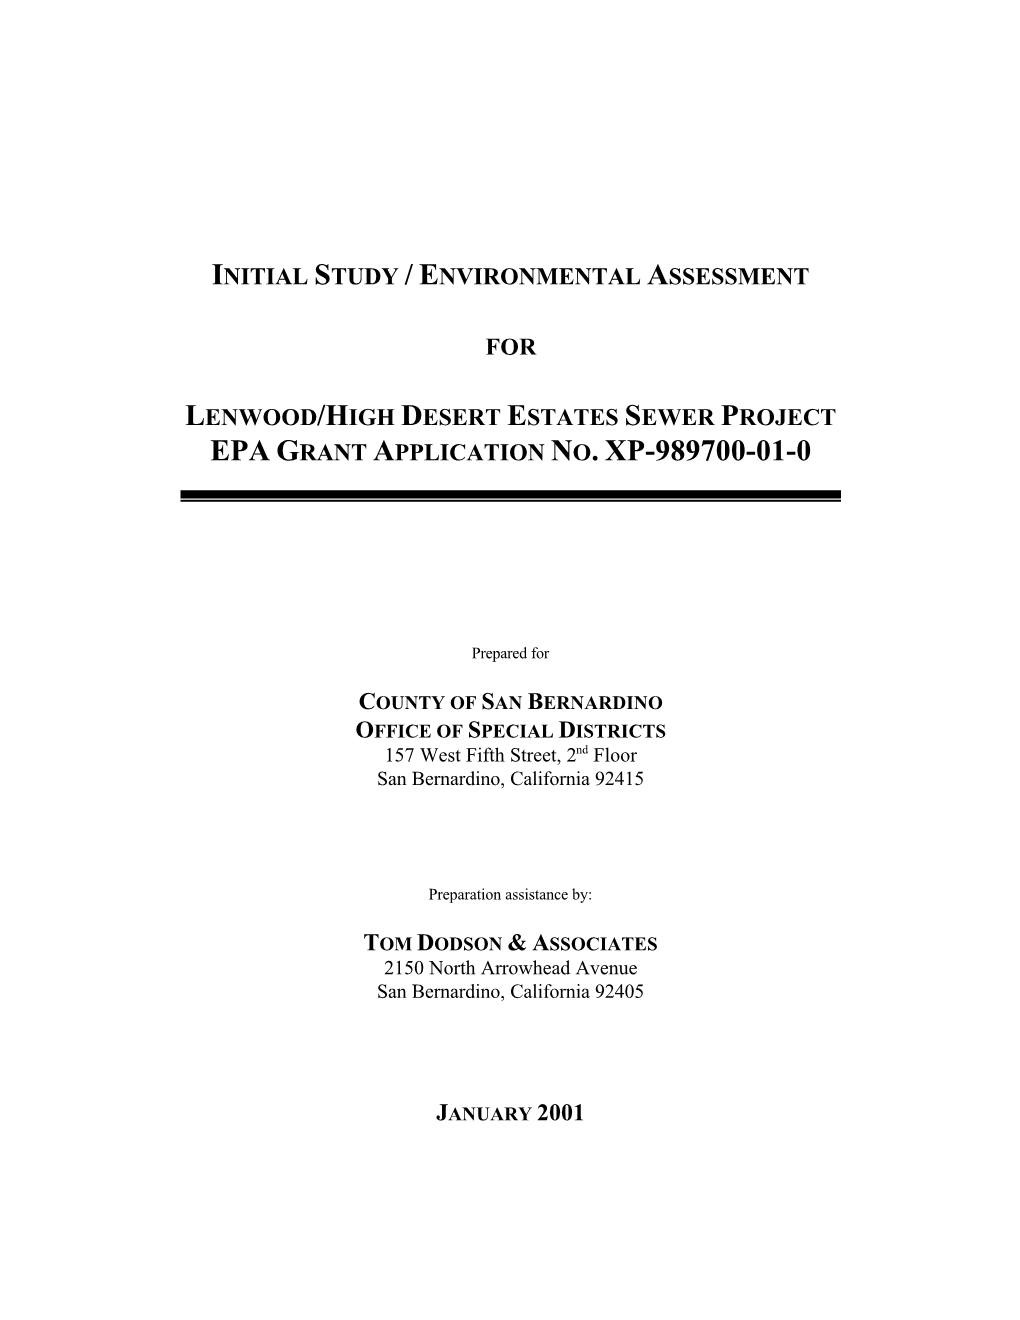 Lenwood Initial Study/Environmental Assessment